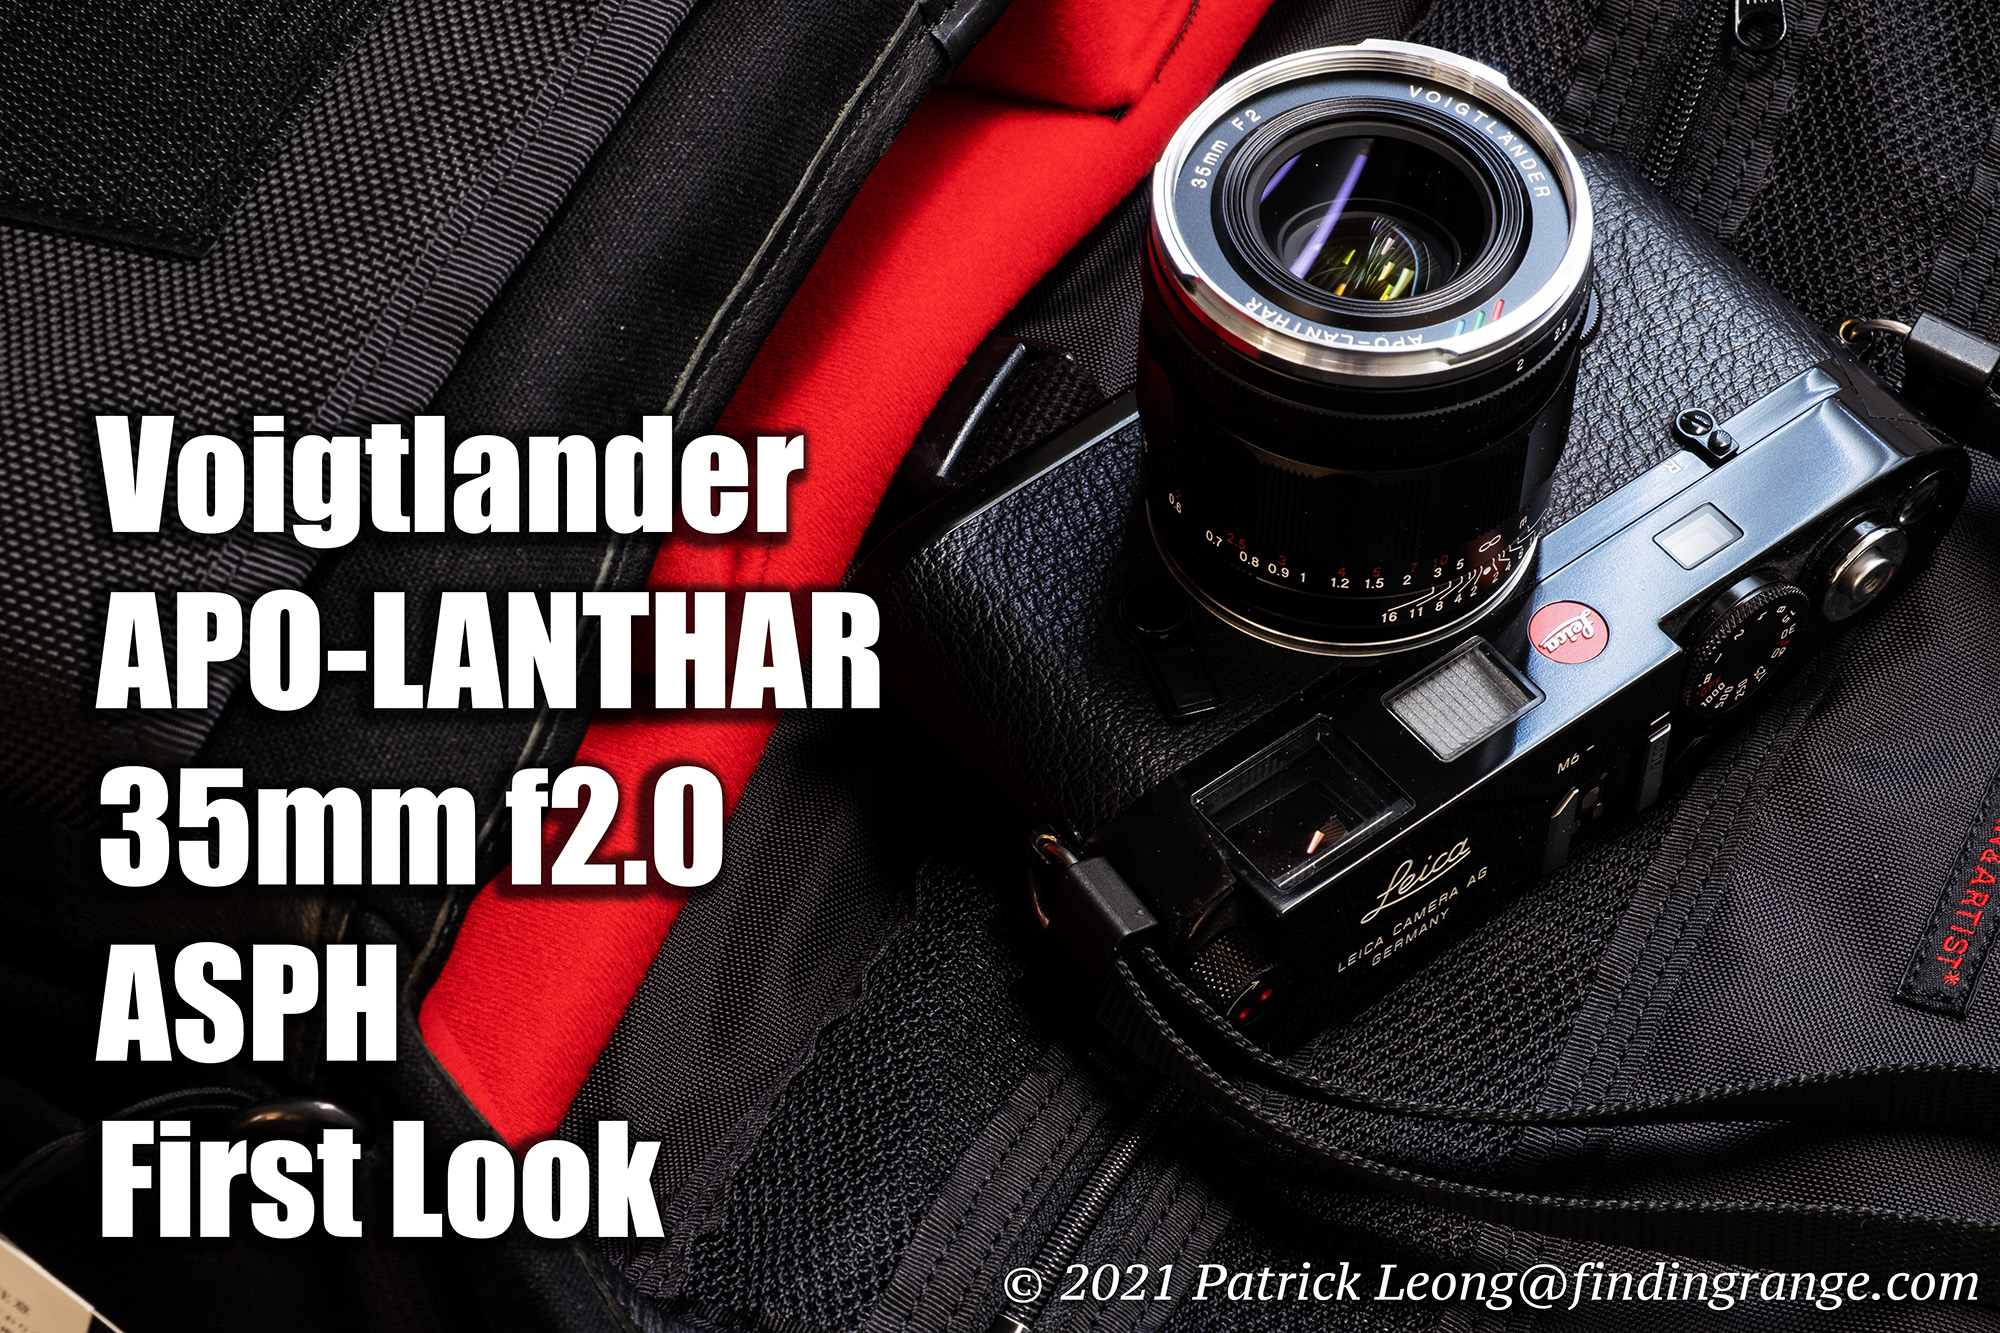 Voigtlander APO-LANTHAR 35mm f2 ASPH First Look - Finding Range